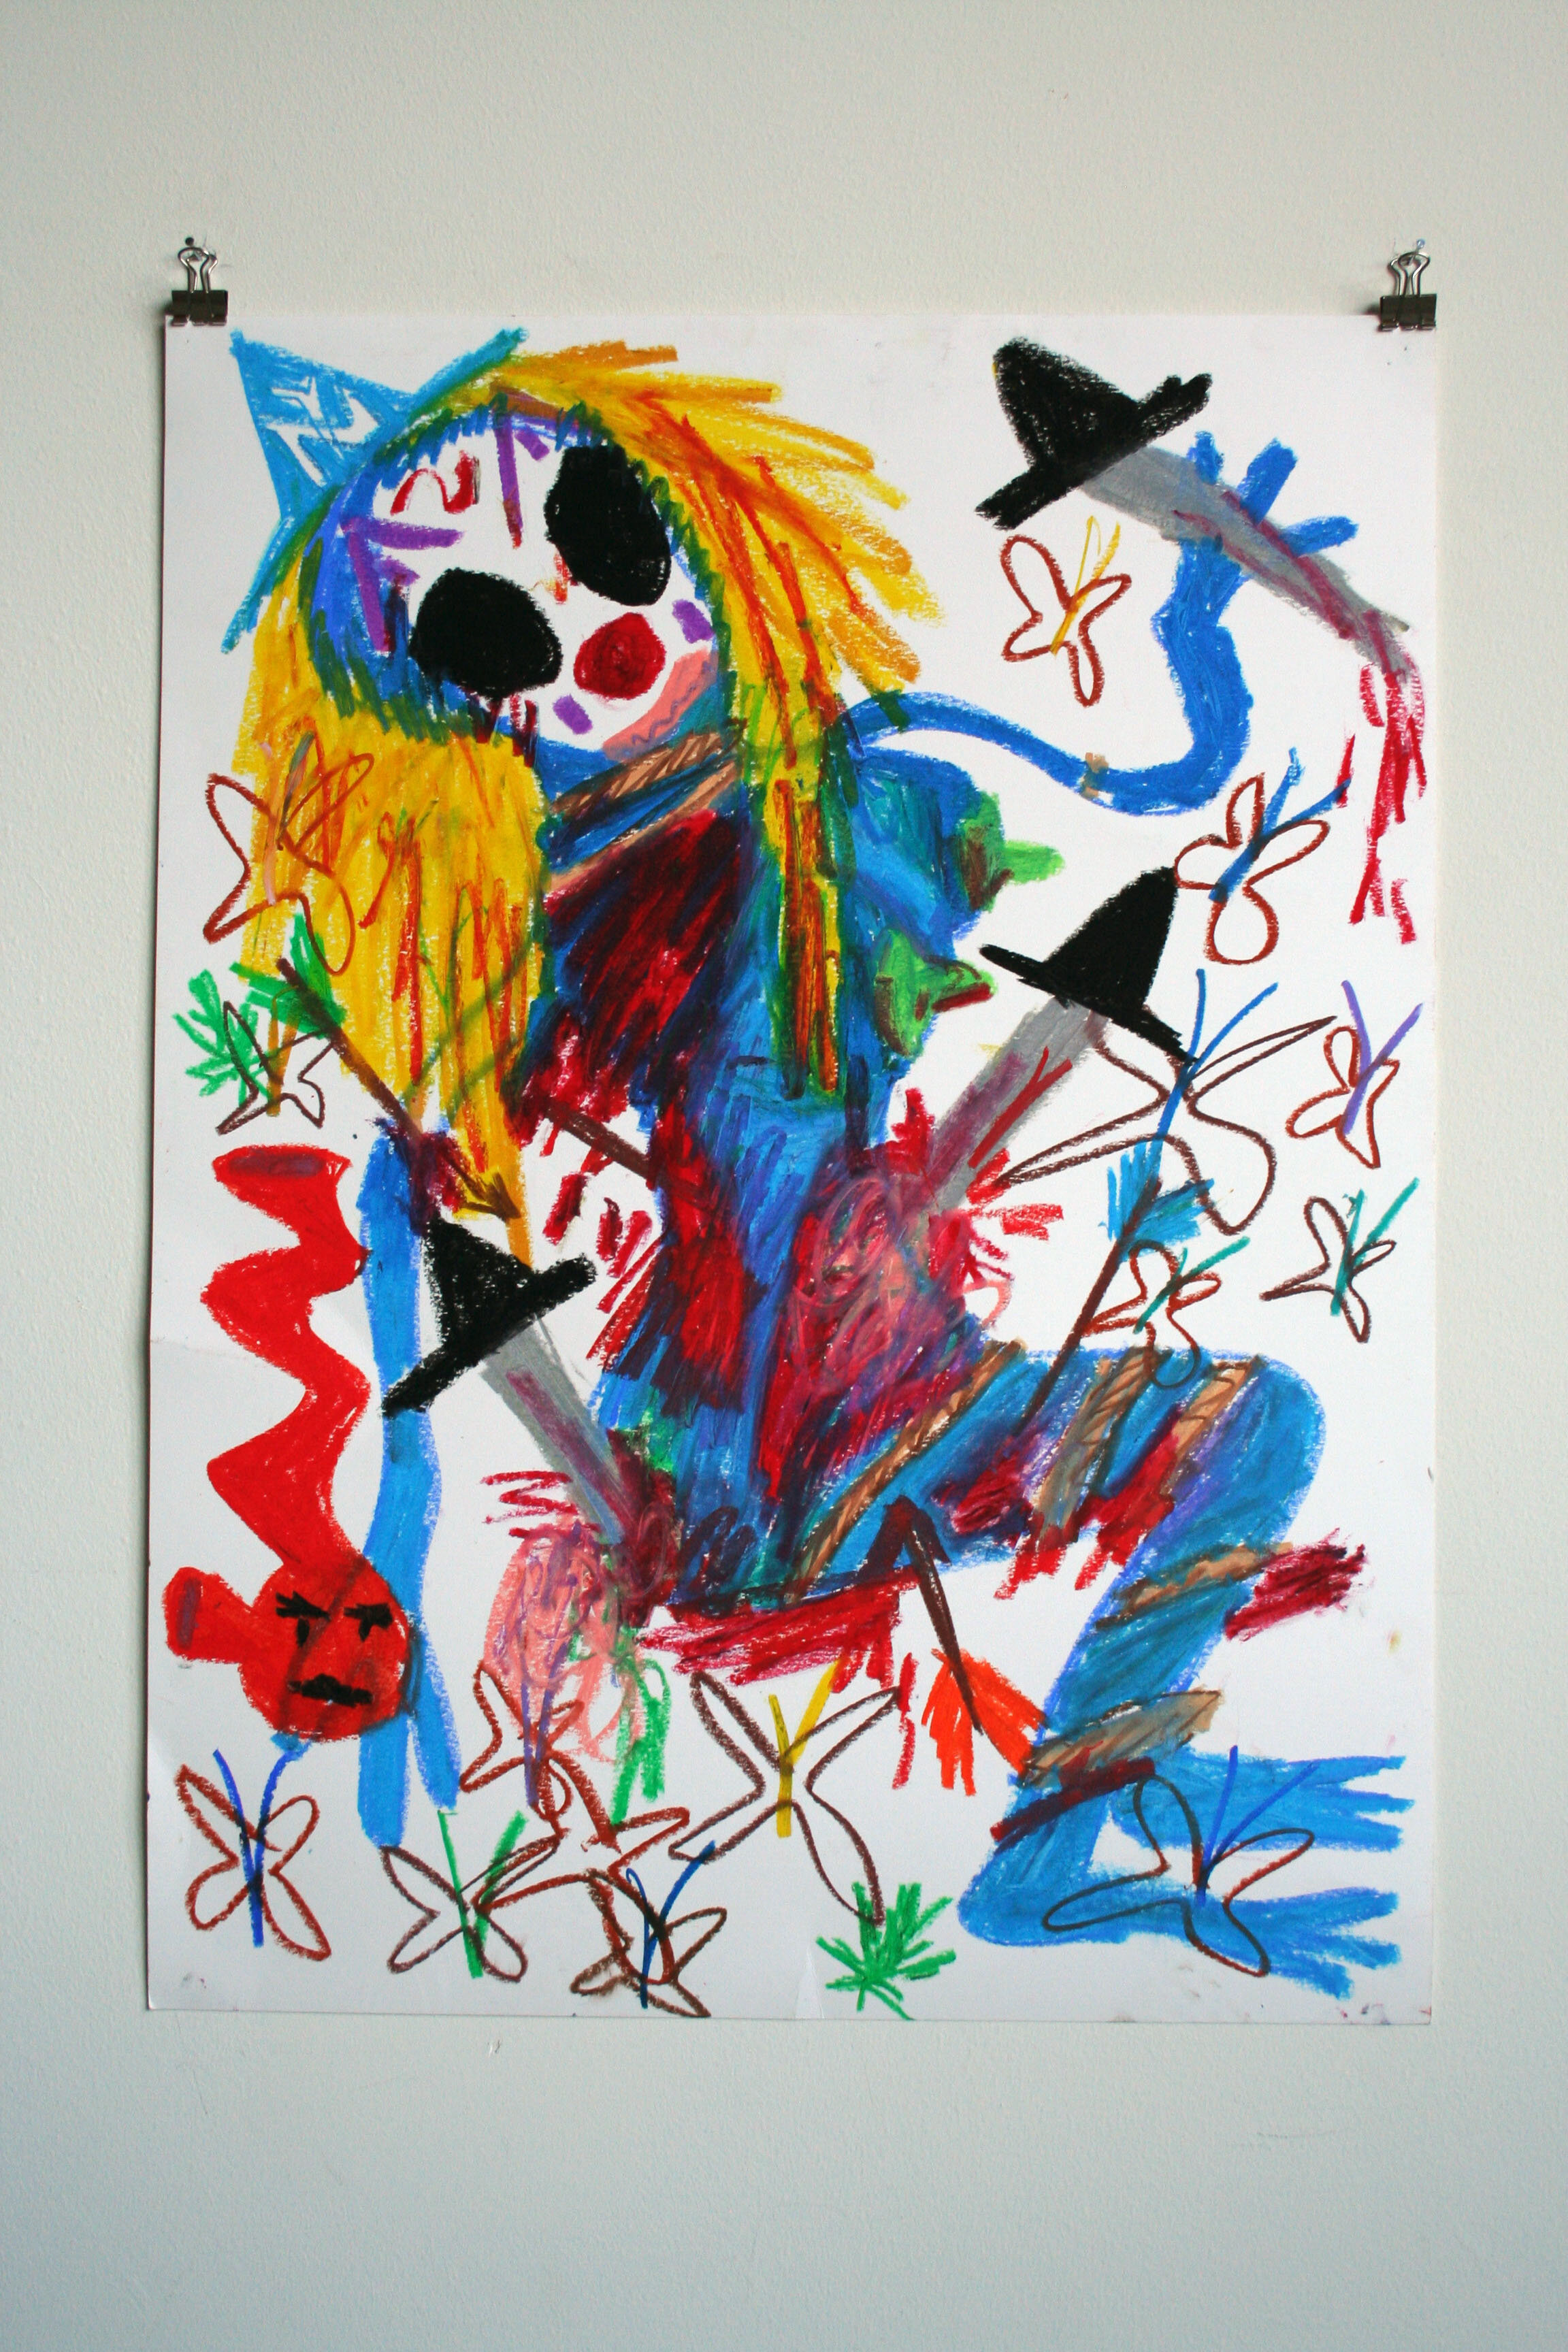   Bleeding Alien Clown Witch , 2014  24 x 18 inches (60.96 x 45.72 cm.)  Oil pastel on paper 